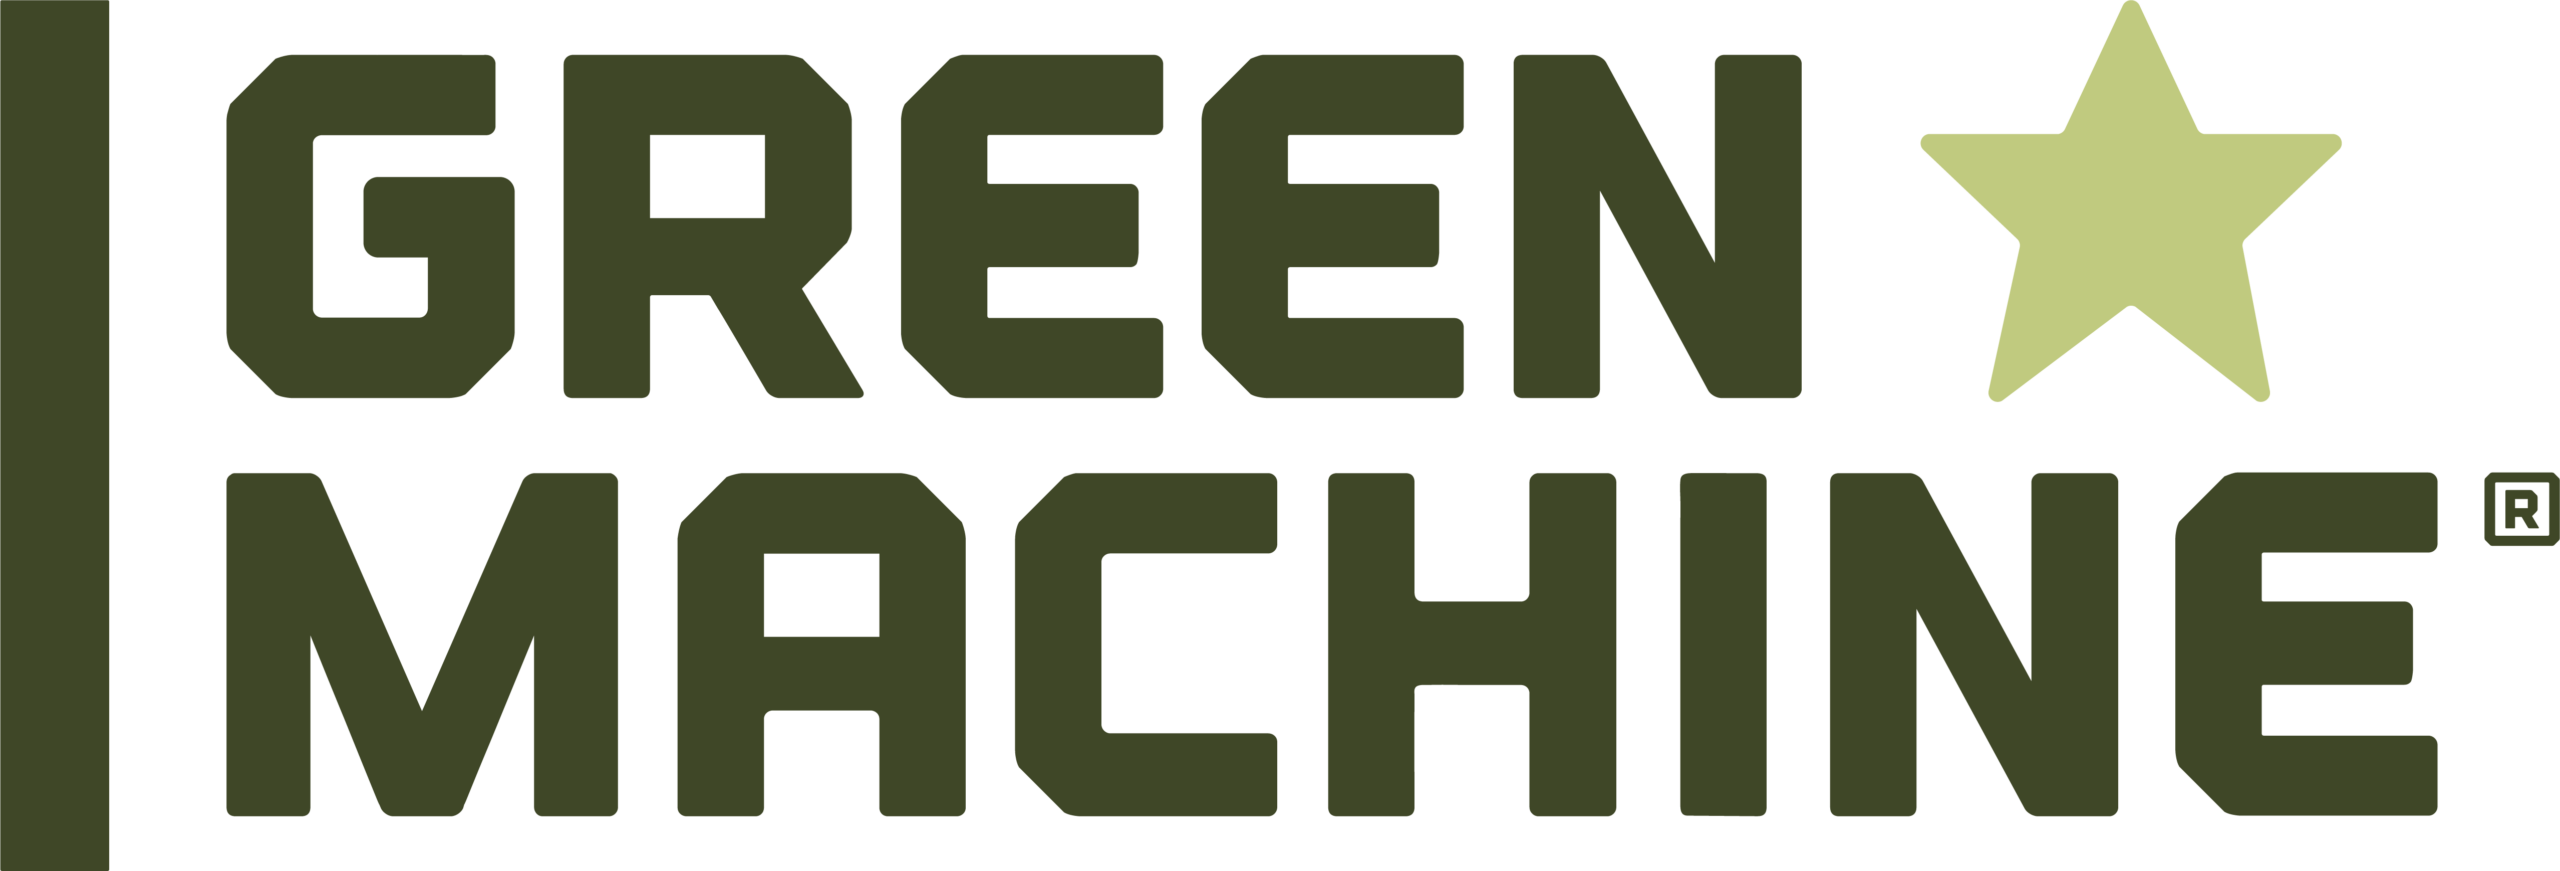 Emily Thorsen - GreenMachine-Logo-Color